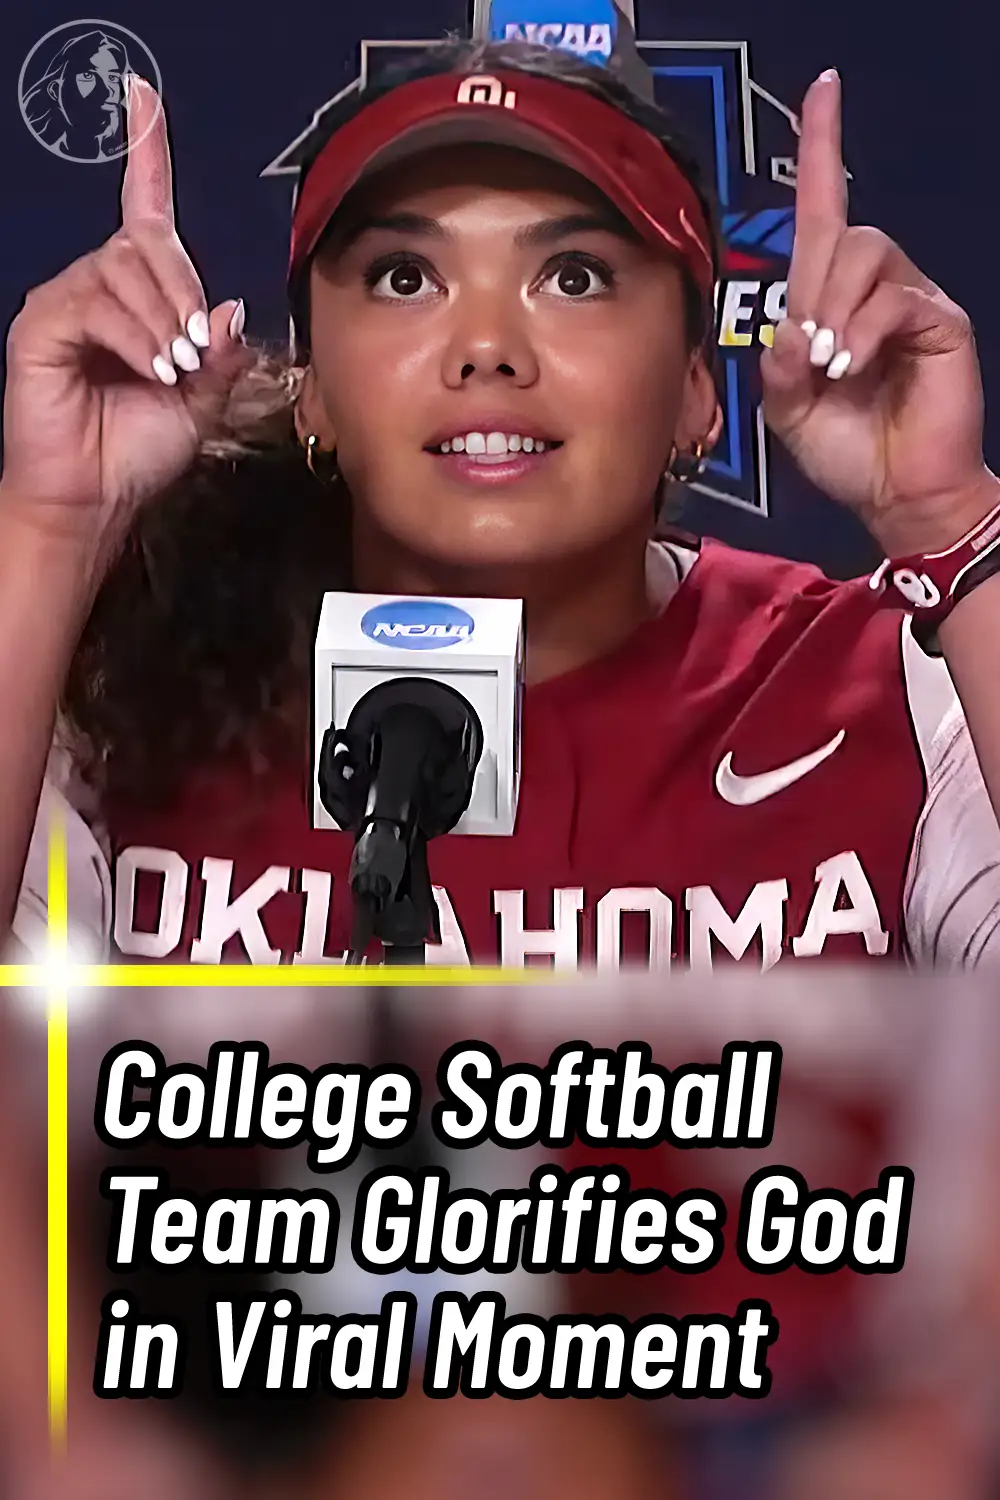 College Softball Team Glorifies God in Viral Moment